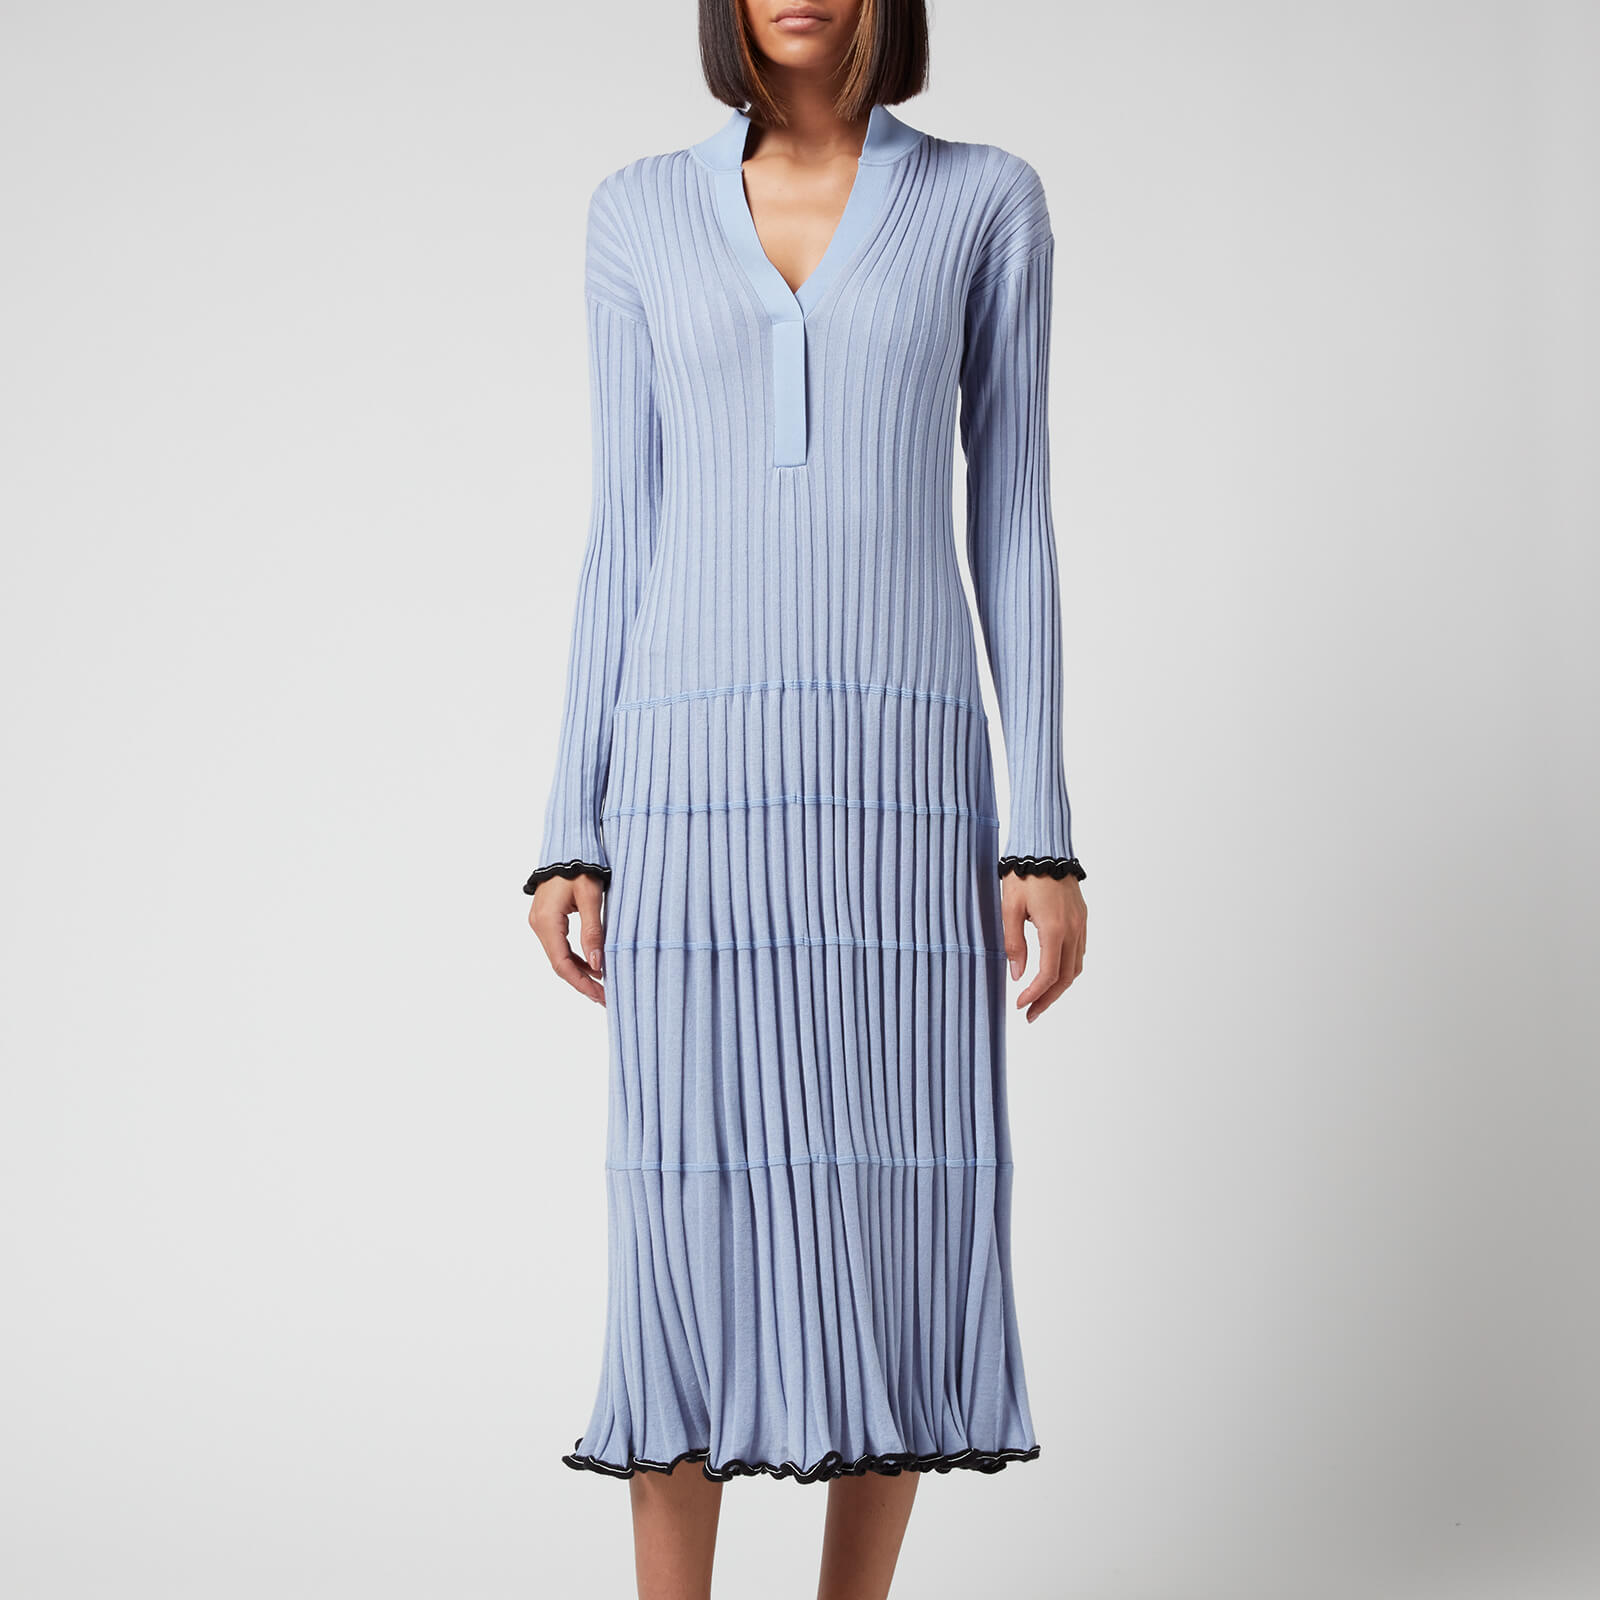 Proenza Schouler Women's Silk Cashmere Contrast Trim V-Neck Dress - Periwinkle - M